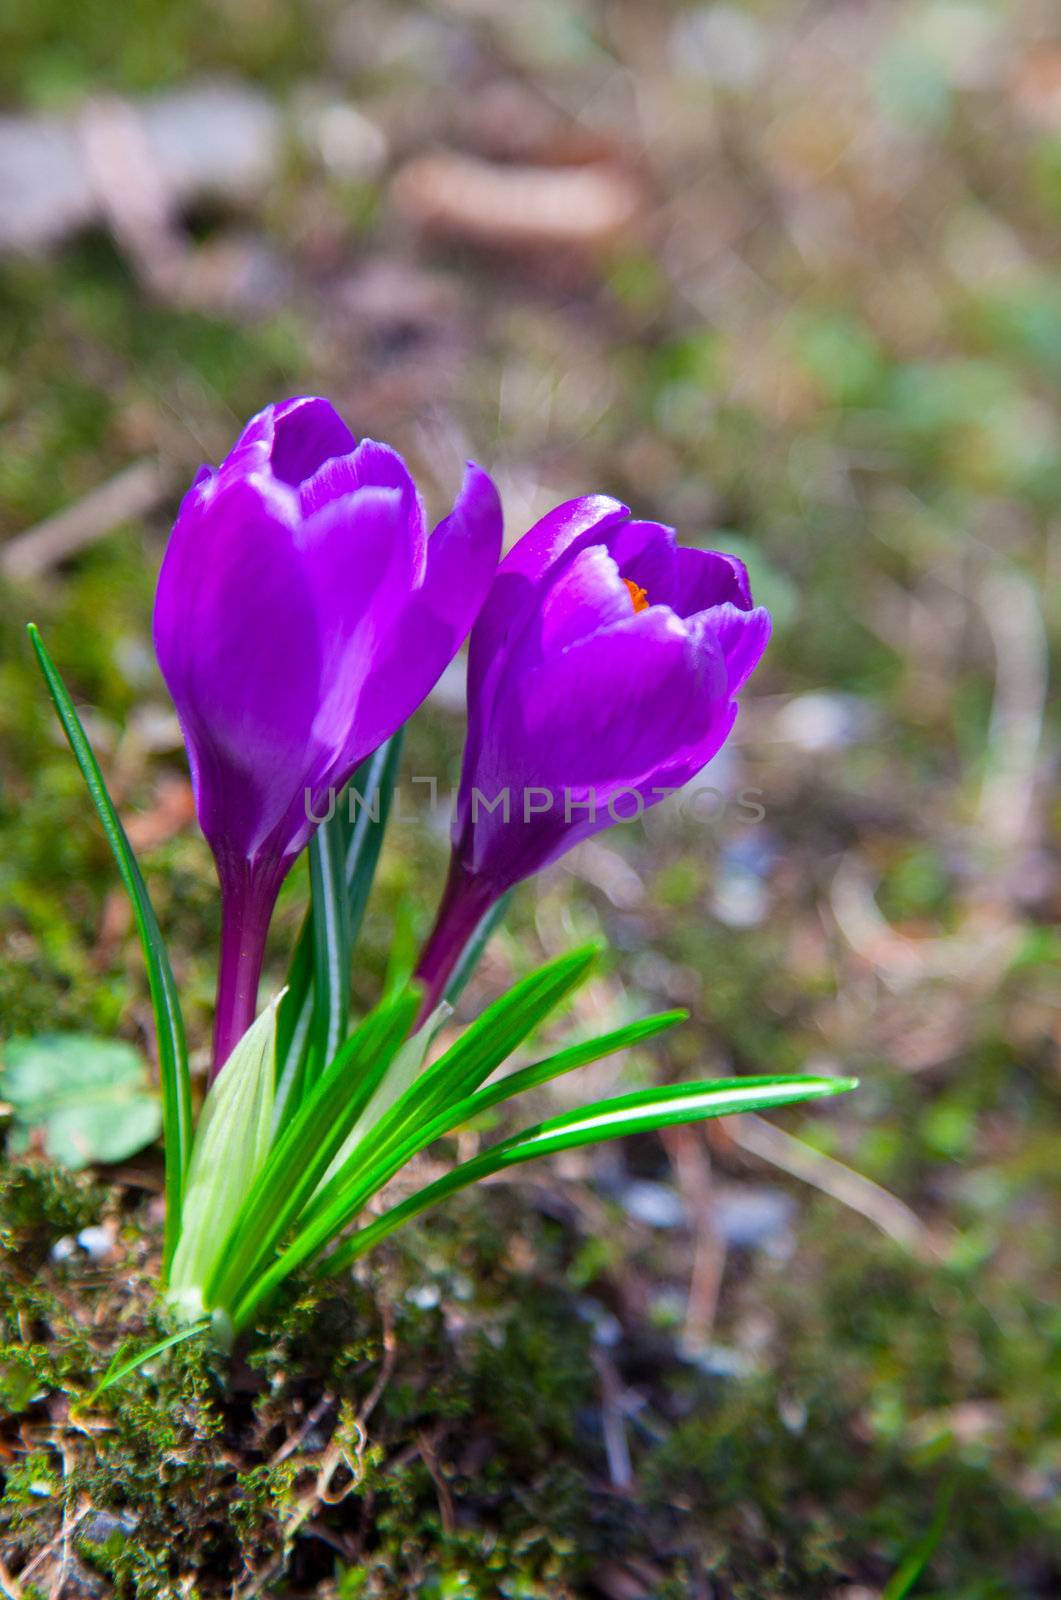 two purple crocus flowers in the springtime